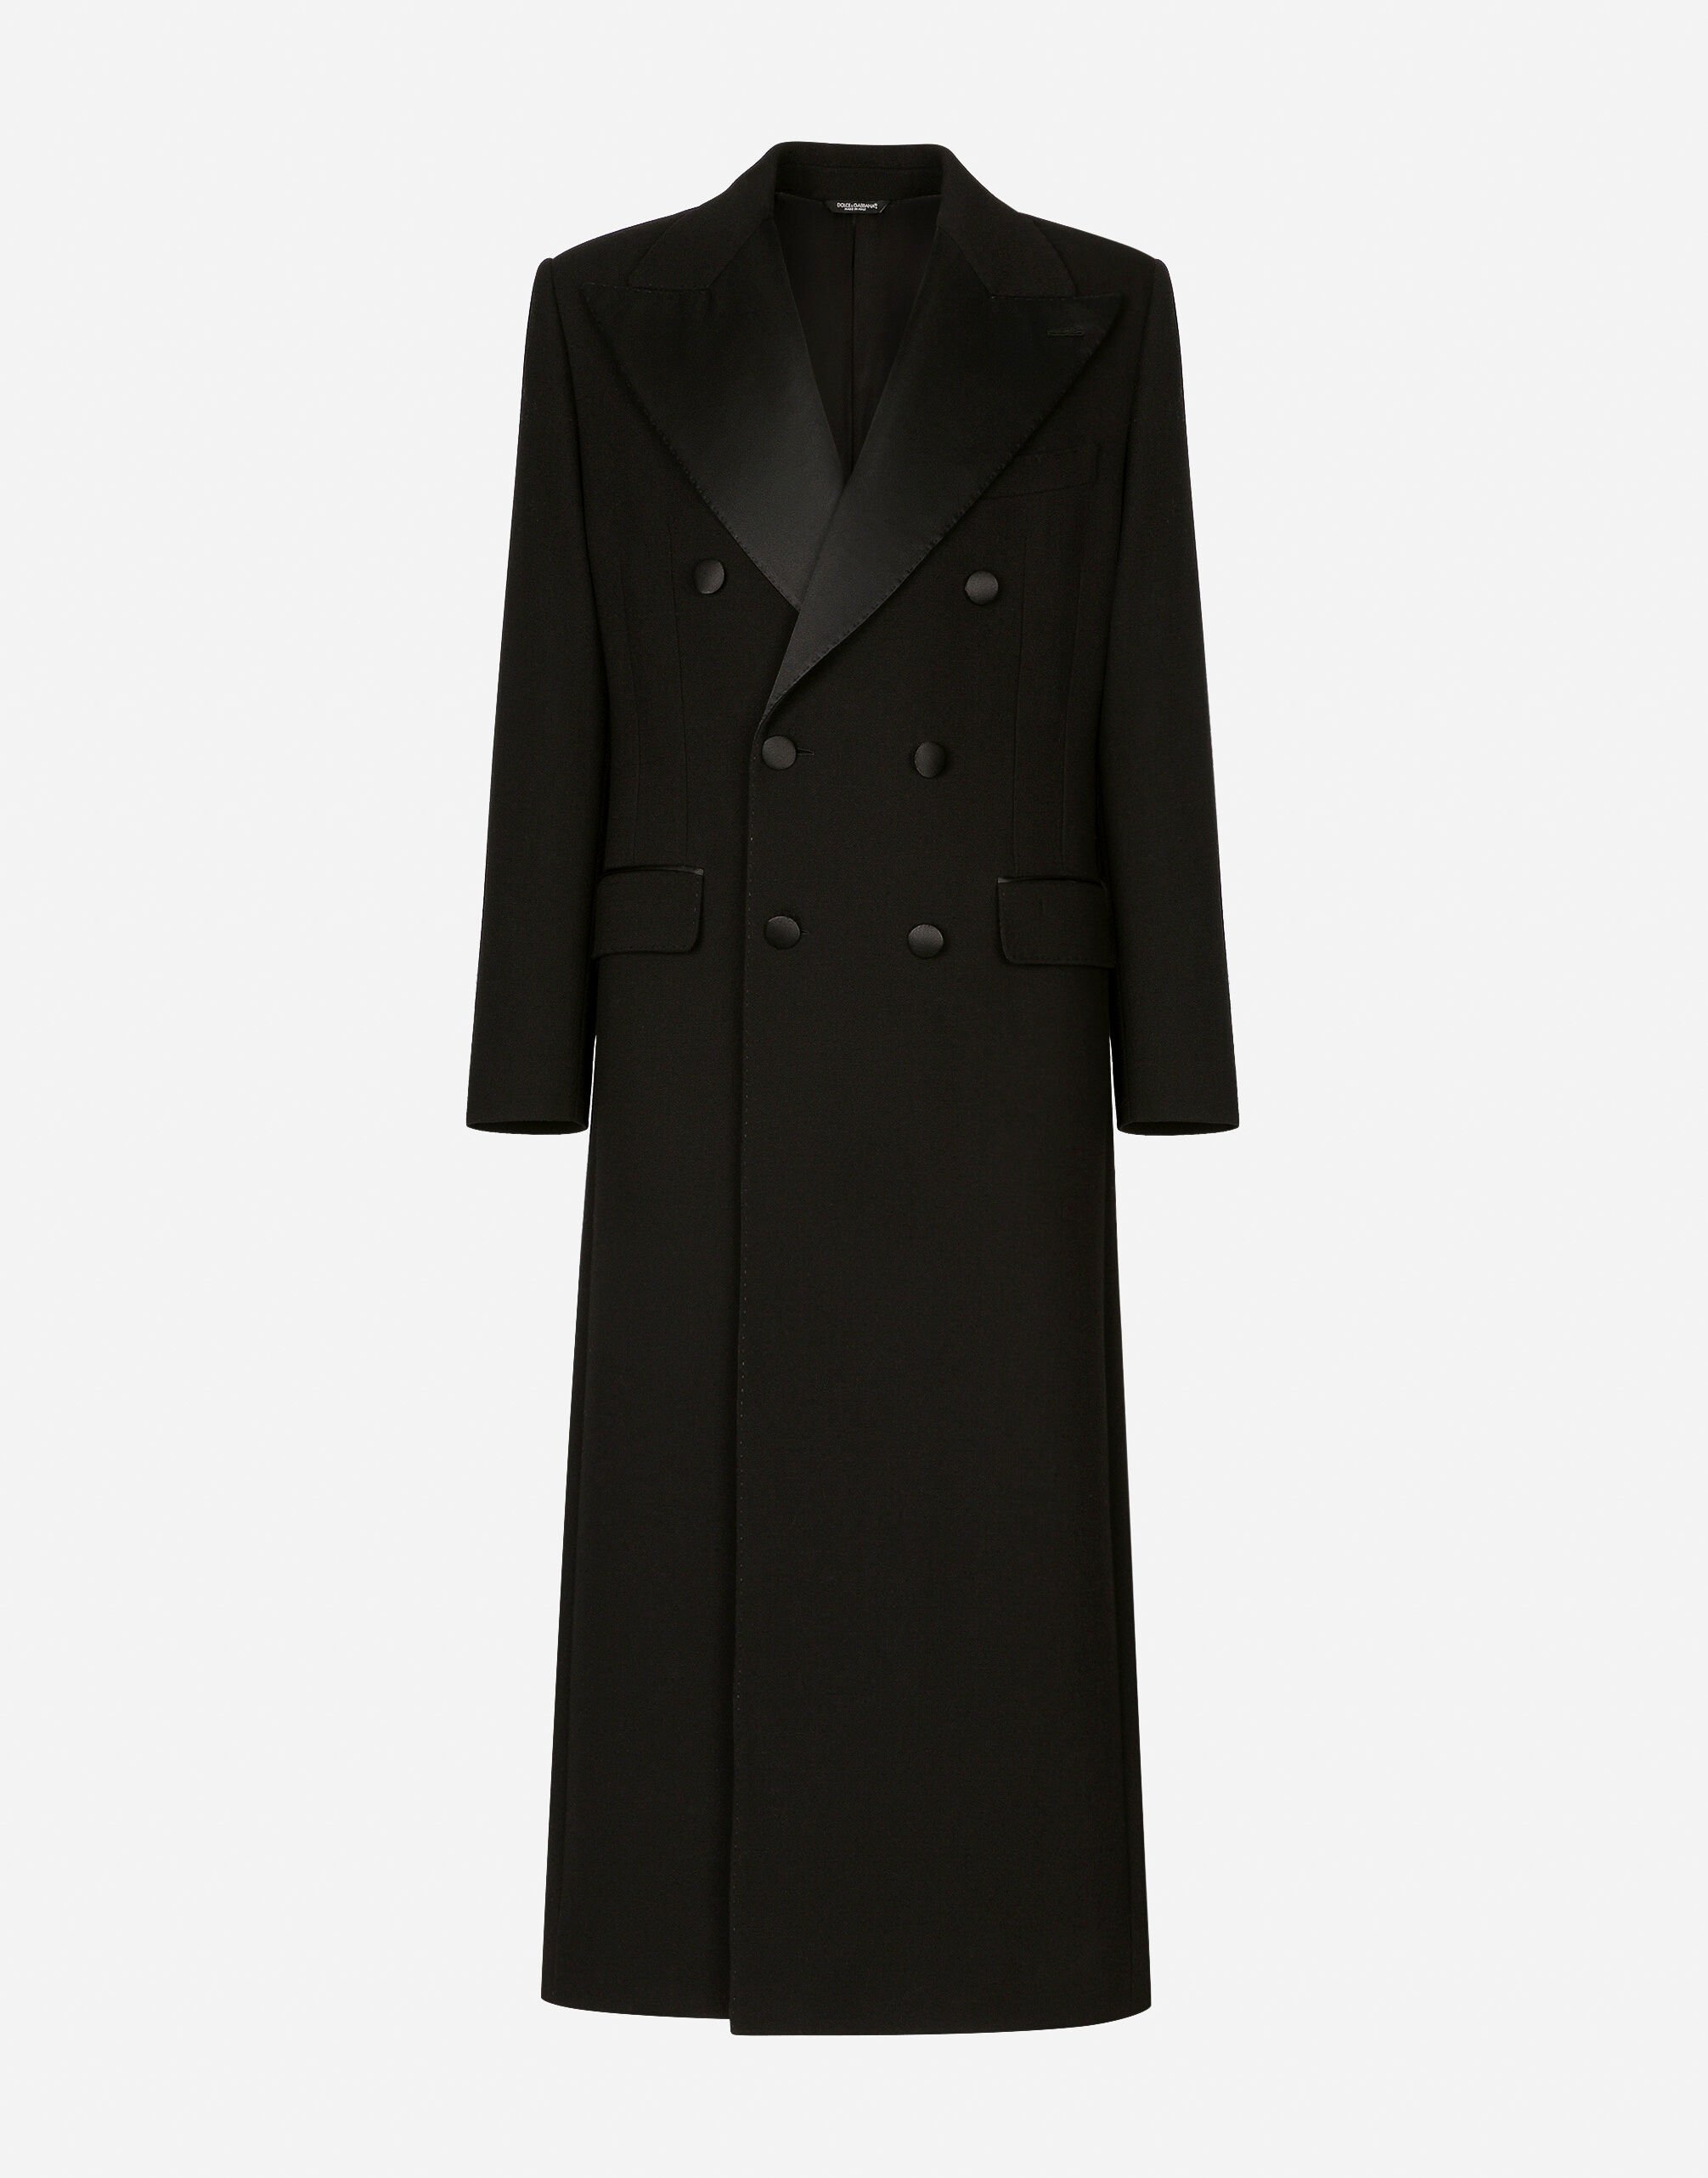 Dolce & Gabbana معطف من صوف كريب مرن بصف أزرار مزدوج أسود G2RR4TFLSIM